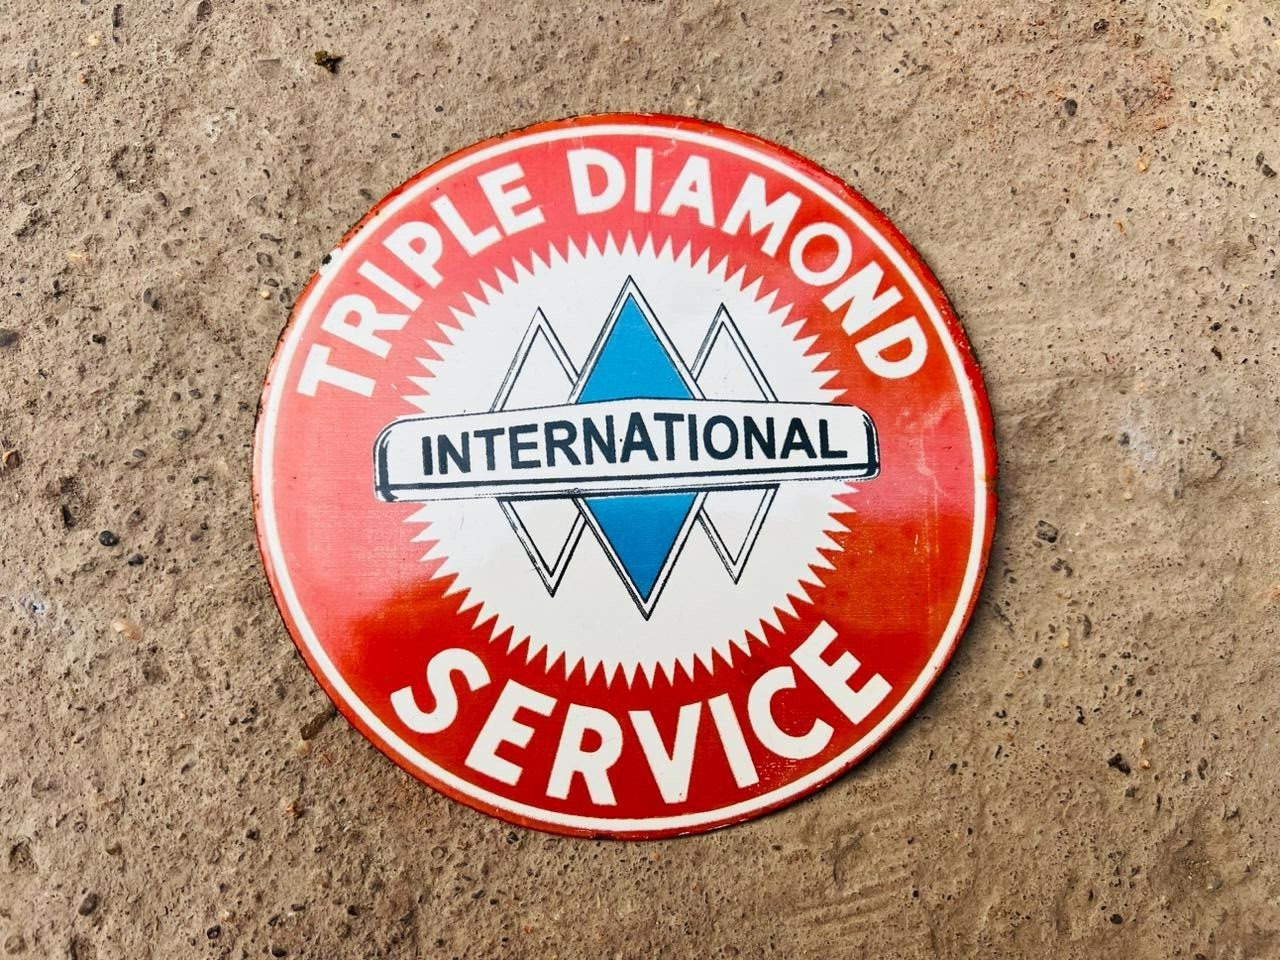 TRIPLE DIAMOND INTERNATIONAL PORCELAIN ENAMEL SIGN 30x30 INCHES